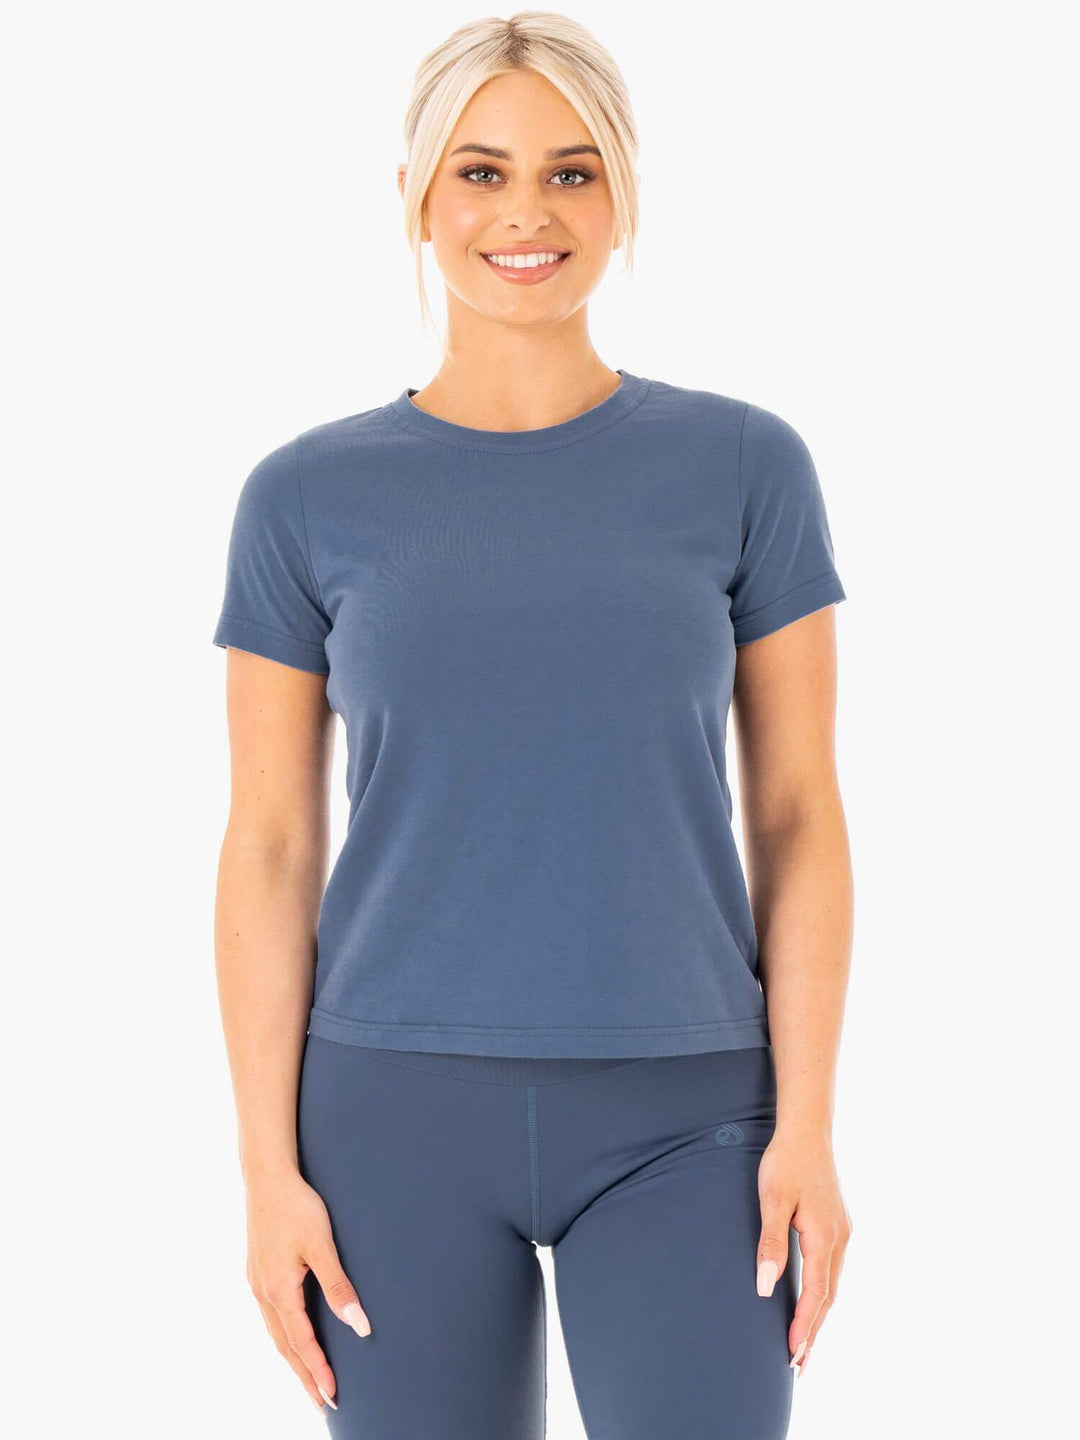 Motion T-Shirt - Steel Blue Clothing Ryderwear 